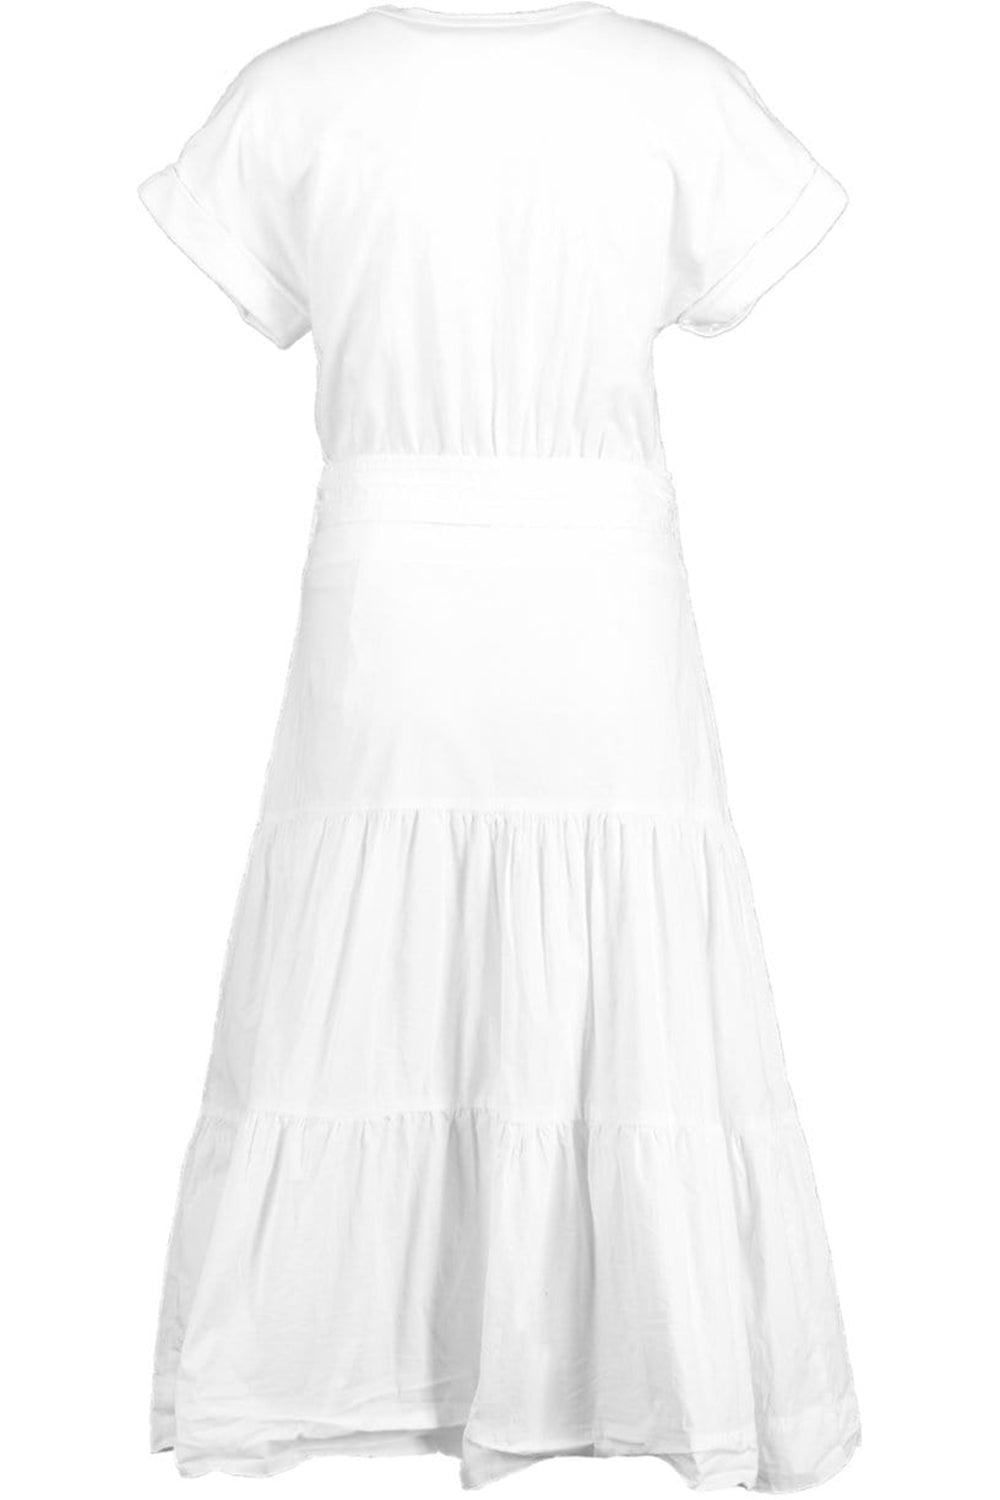 VERONICA BEARD-Scoop Neck Midi Length Dress-WHITE